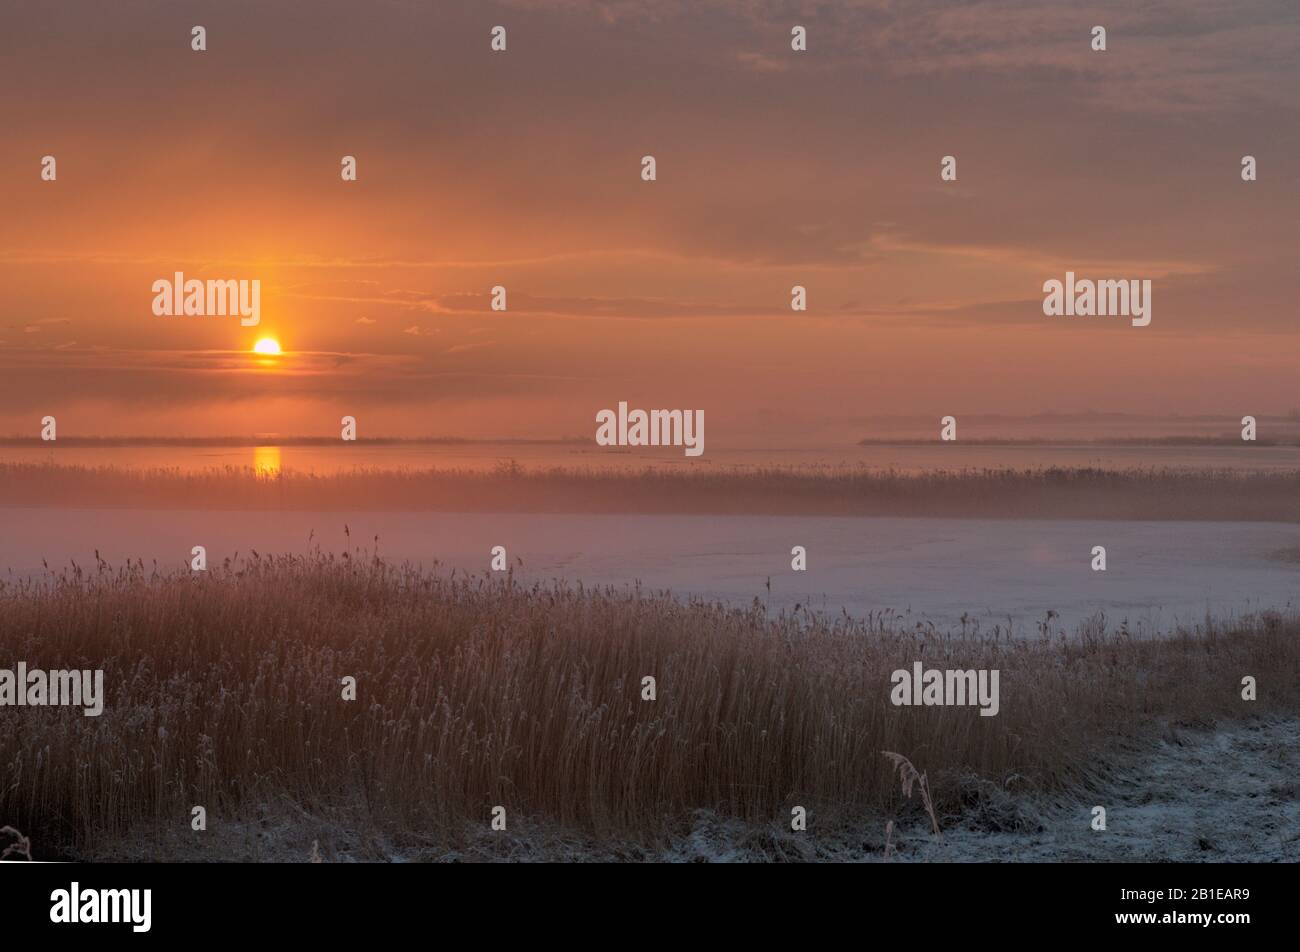 Misty Sunrise at Amstelmeer, Netherlands, Amstelmeer Stock Photo